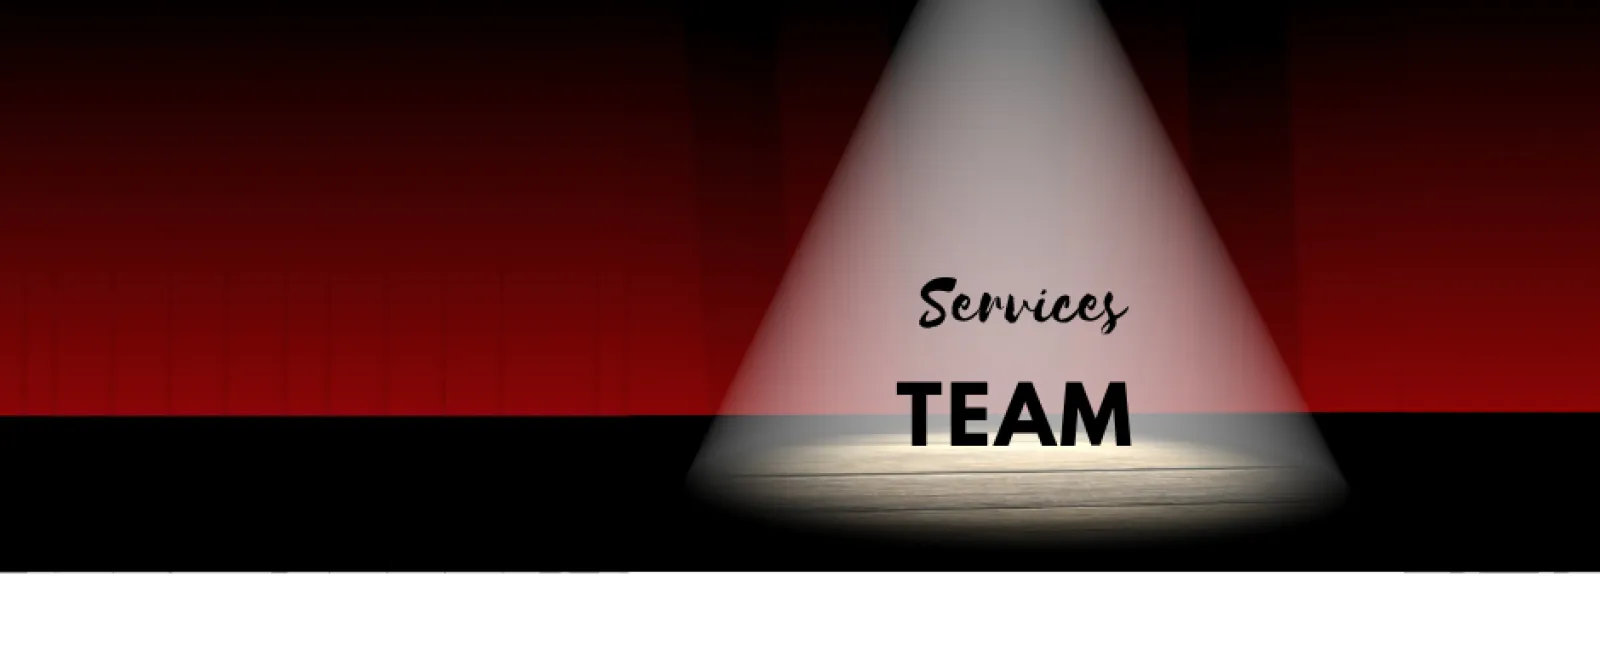 Services Team